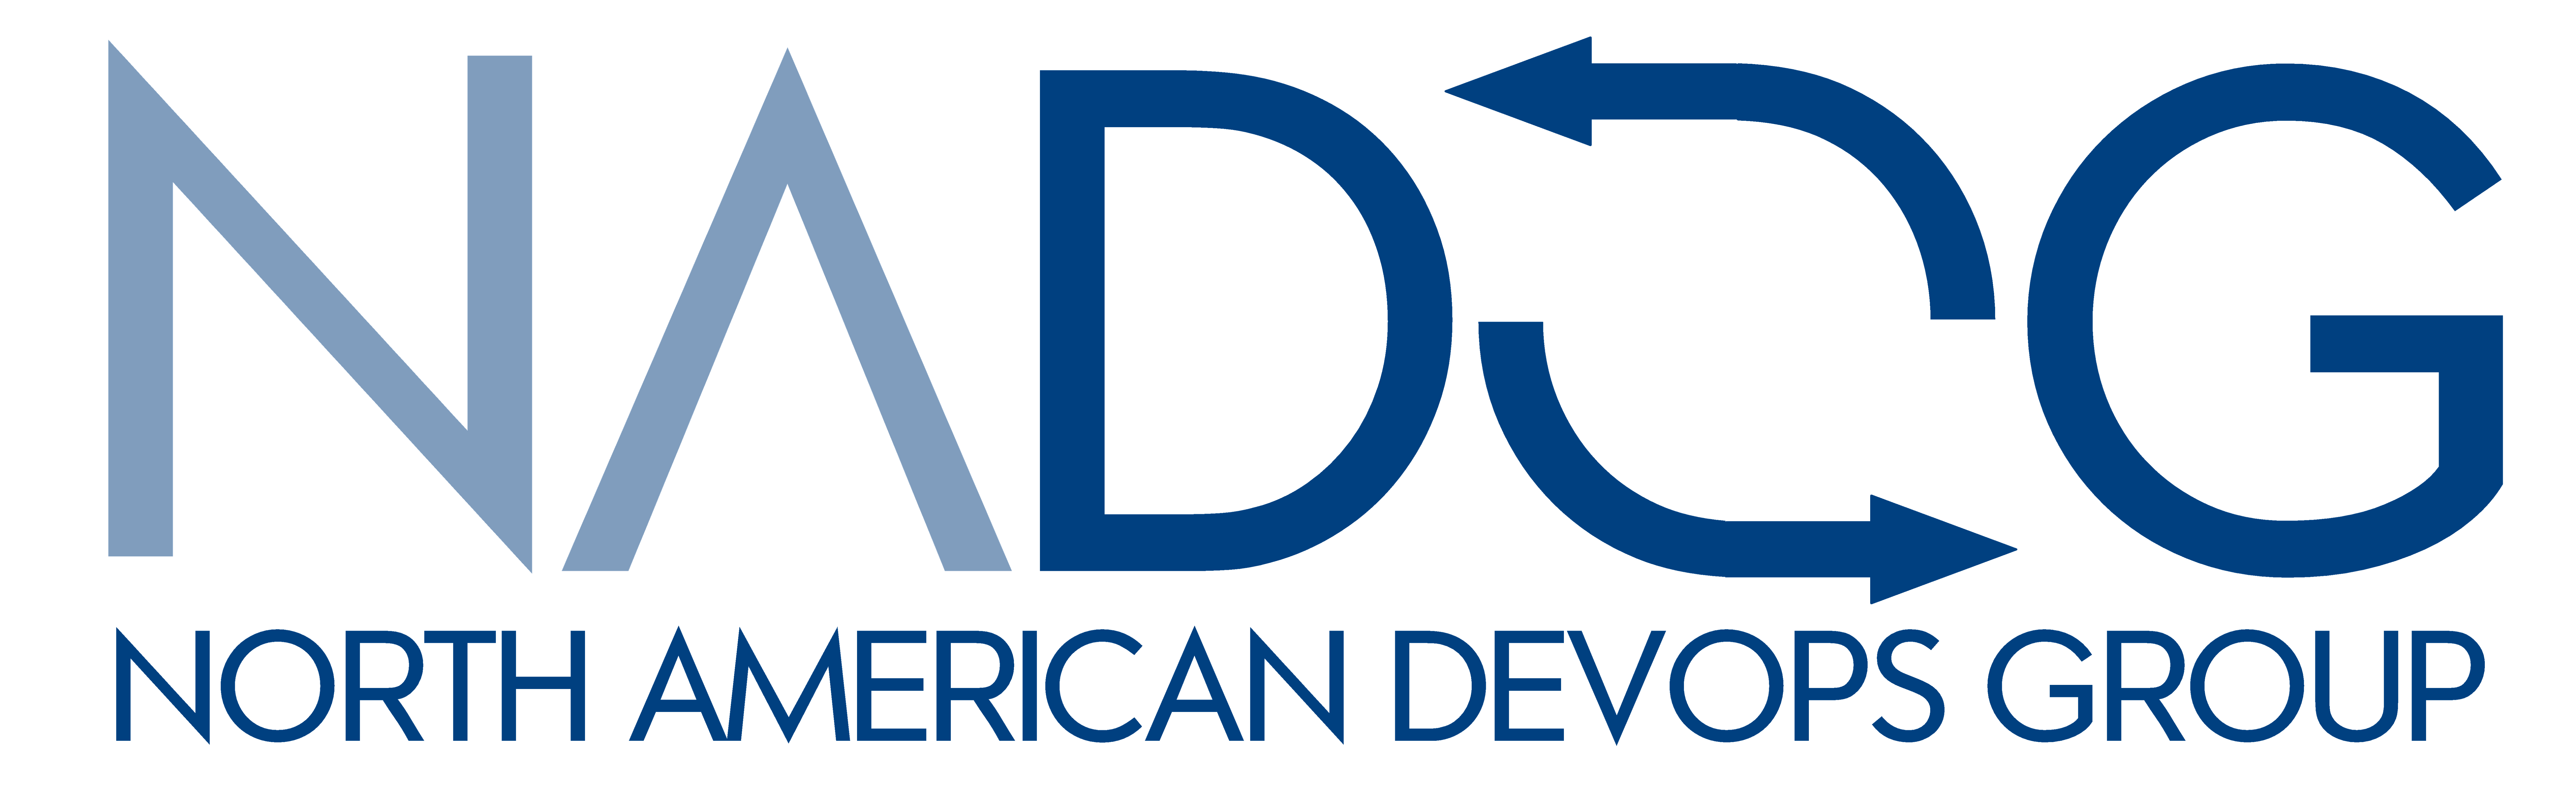 North American DevOps Group